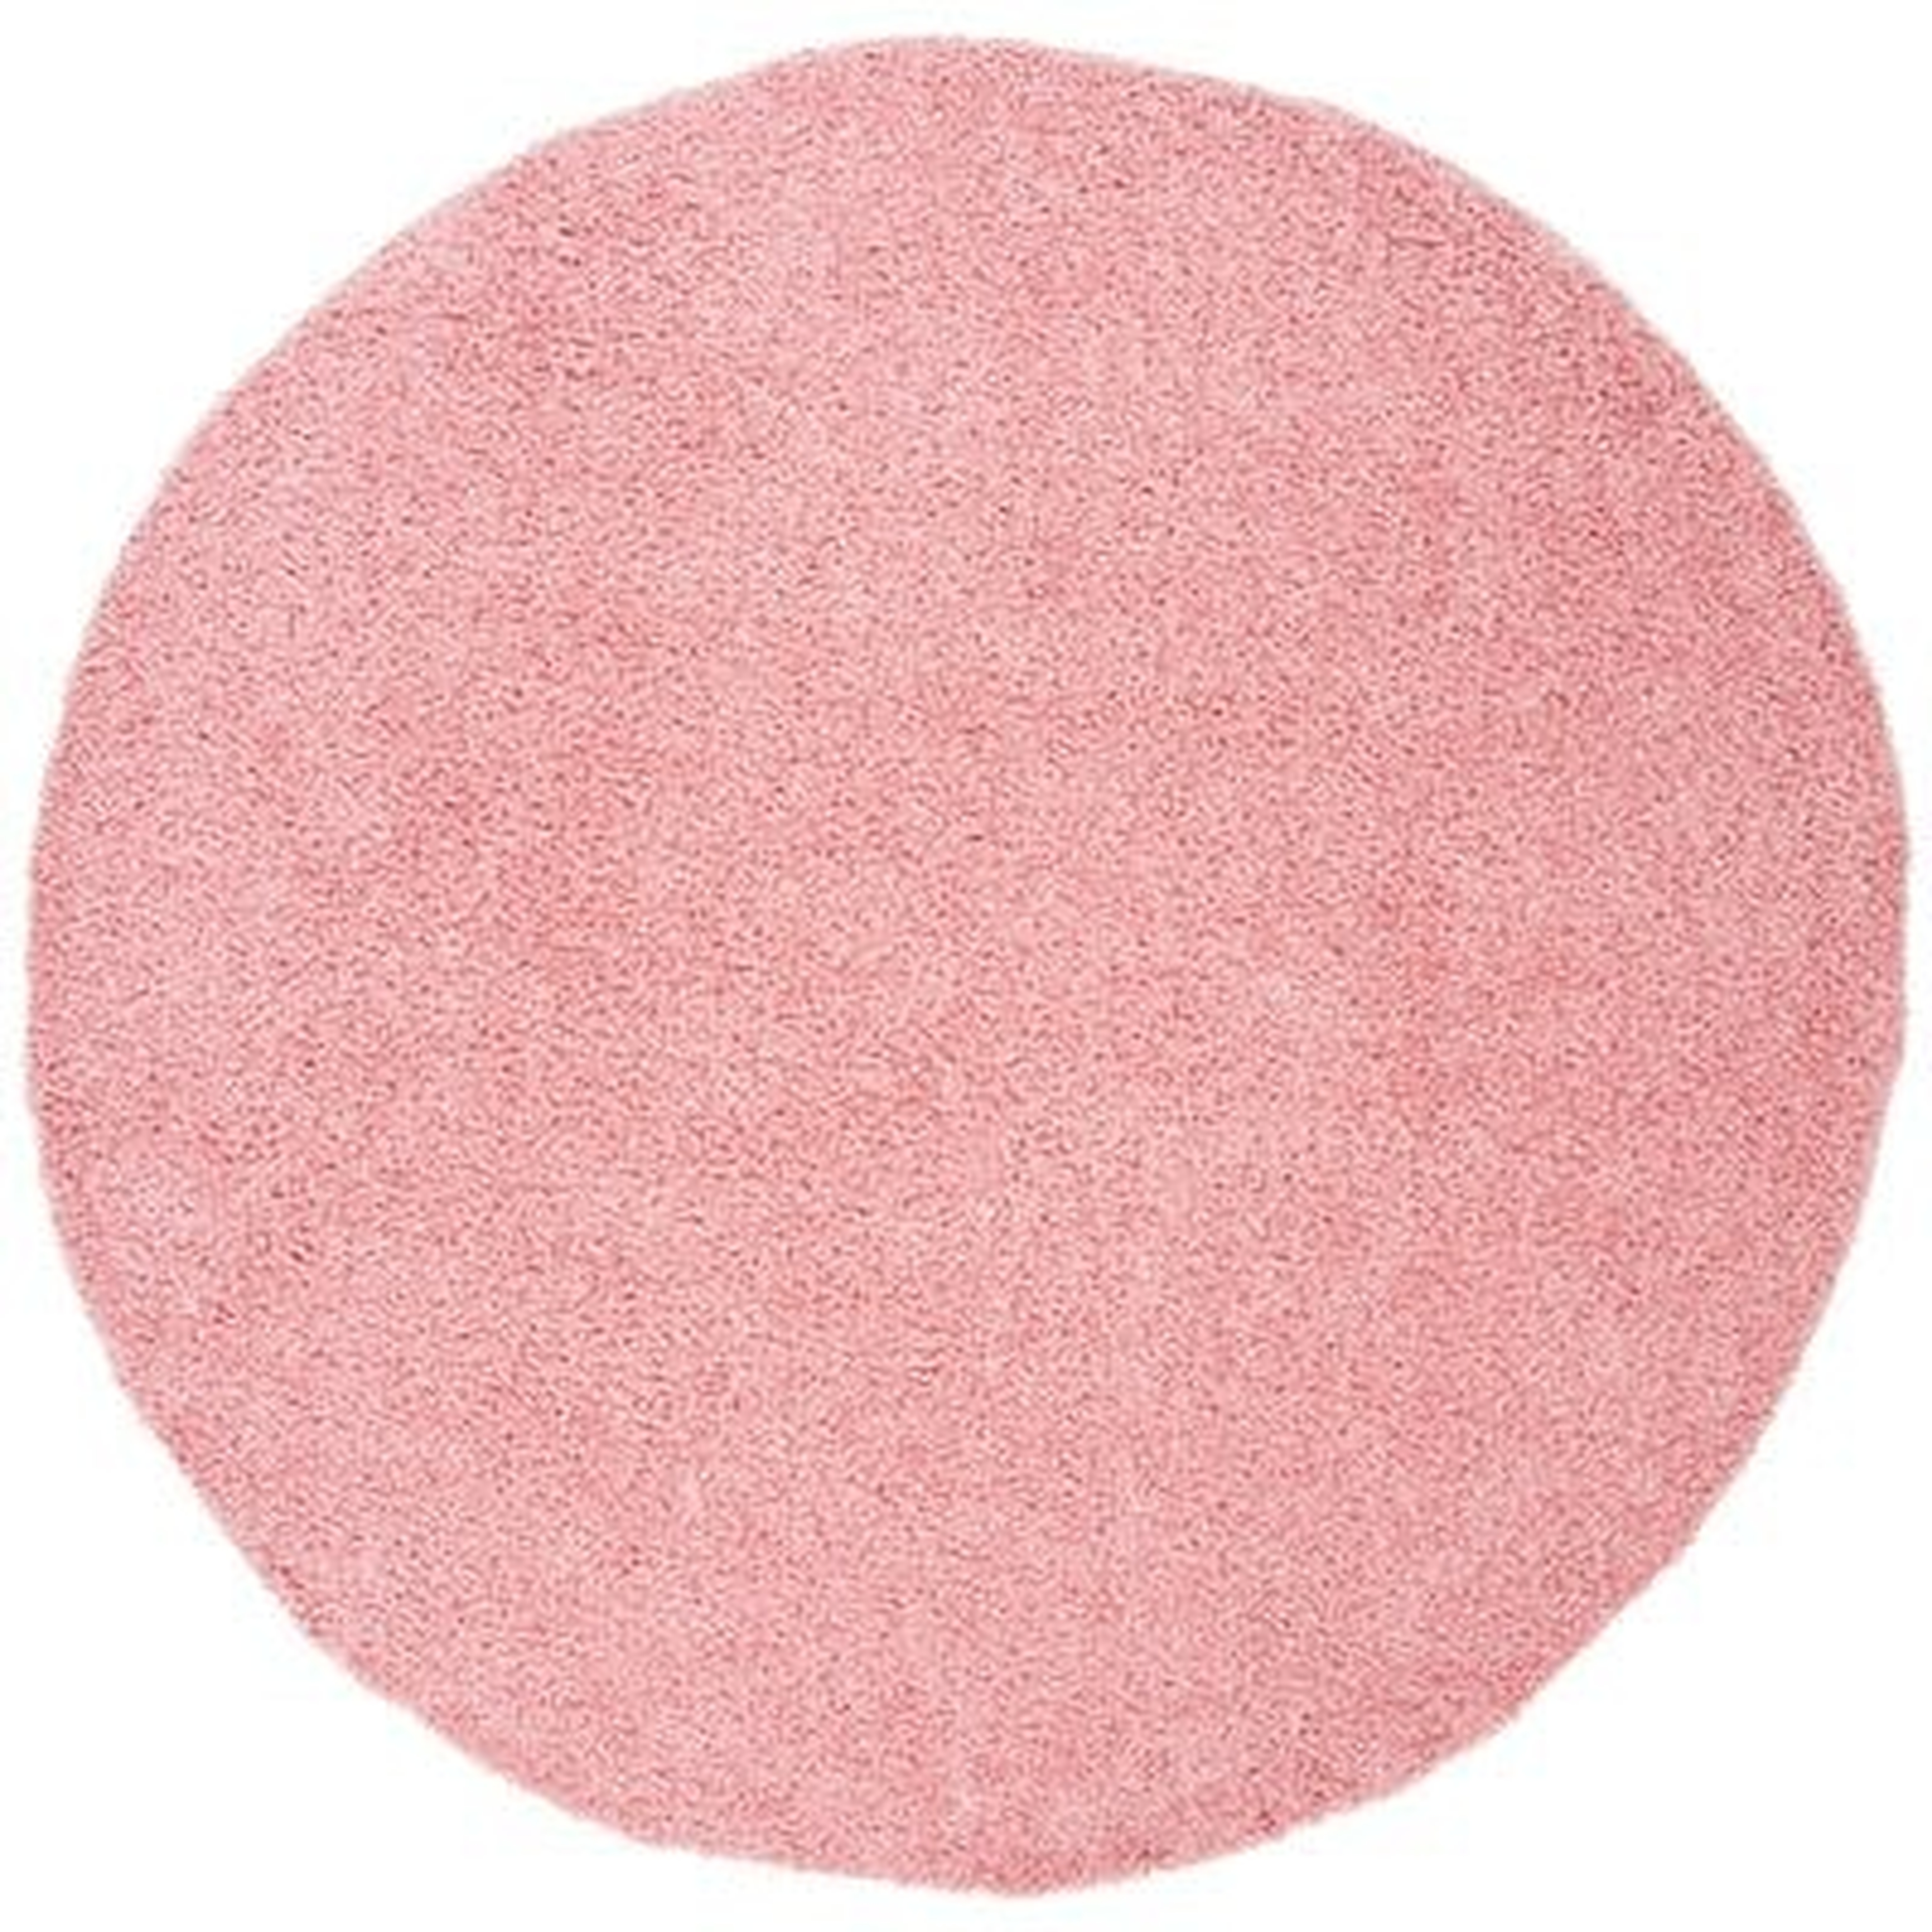 Schwanke Shag Pink Area Rug - Wayfair